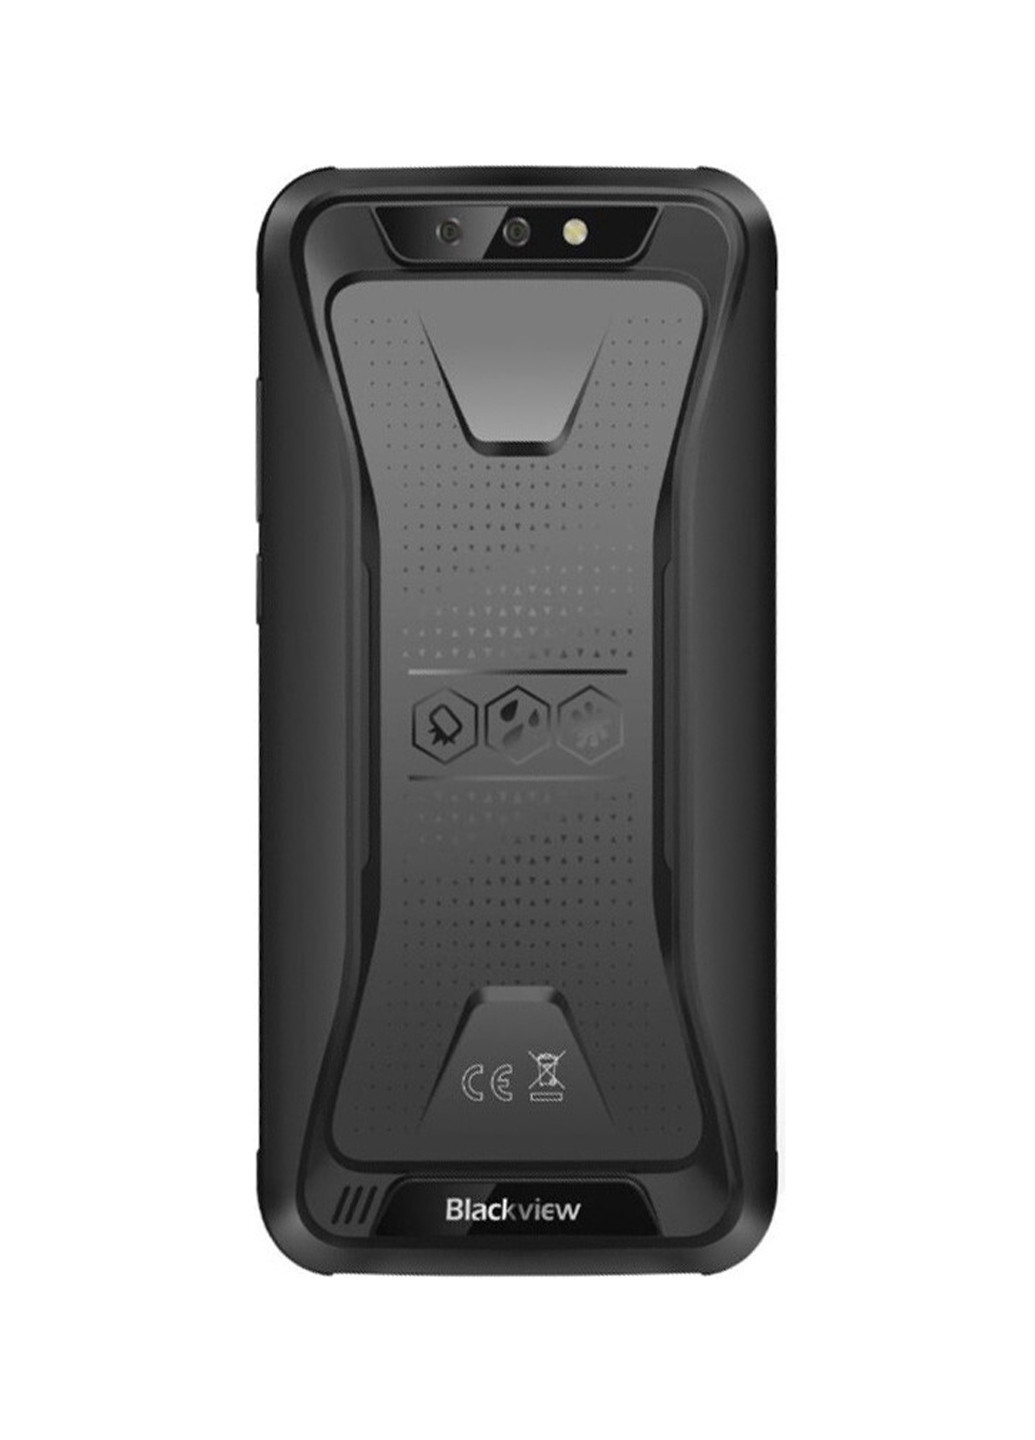 Смартфон Blackview BV5500 Pro 3/16GB Black чёрный